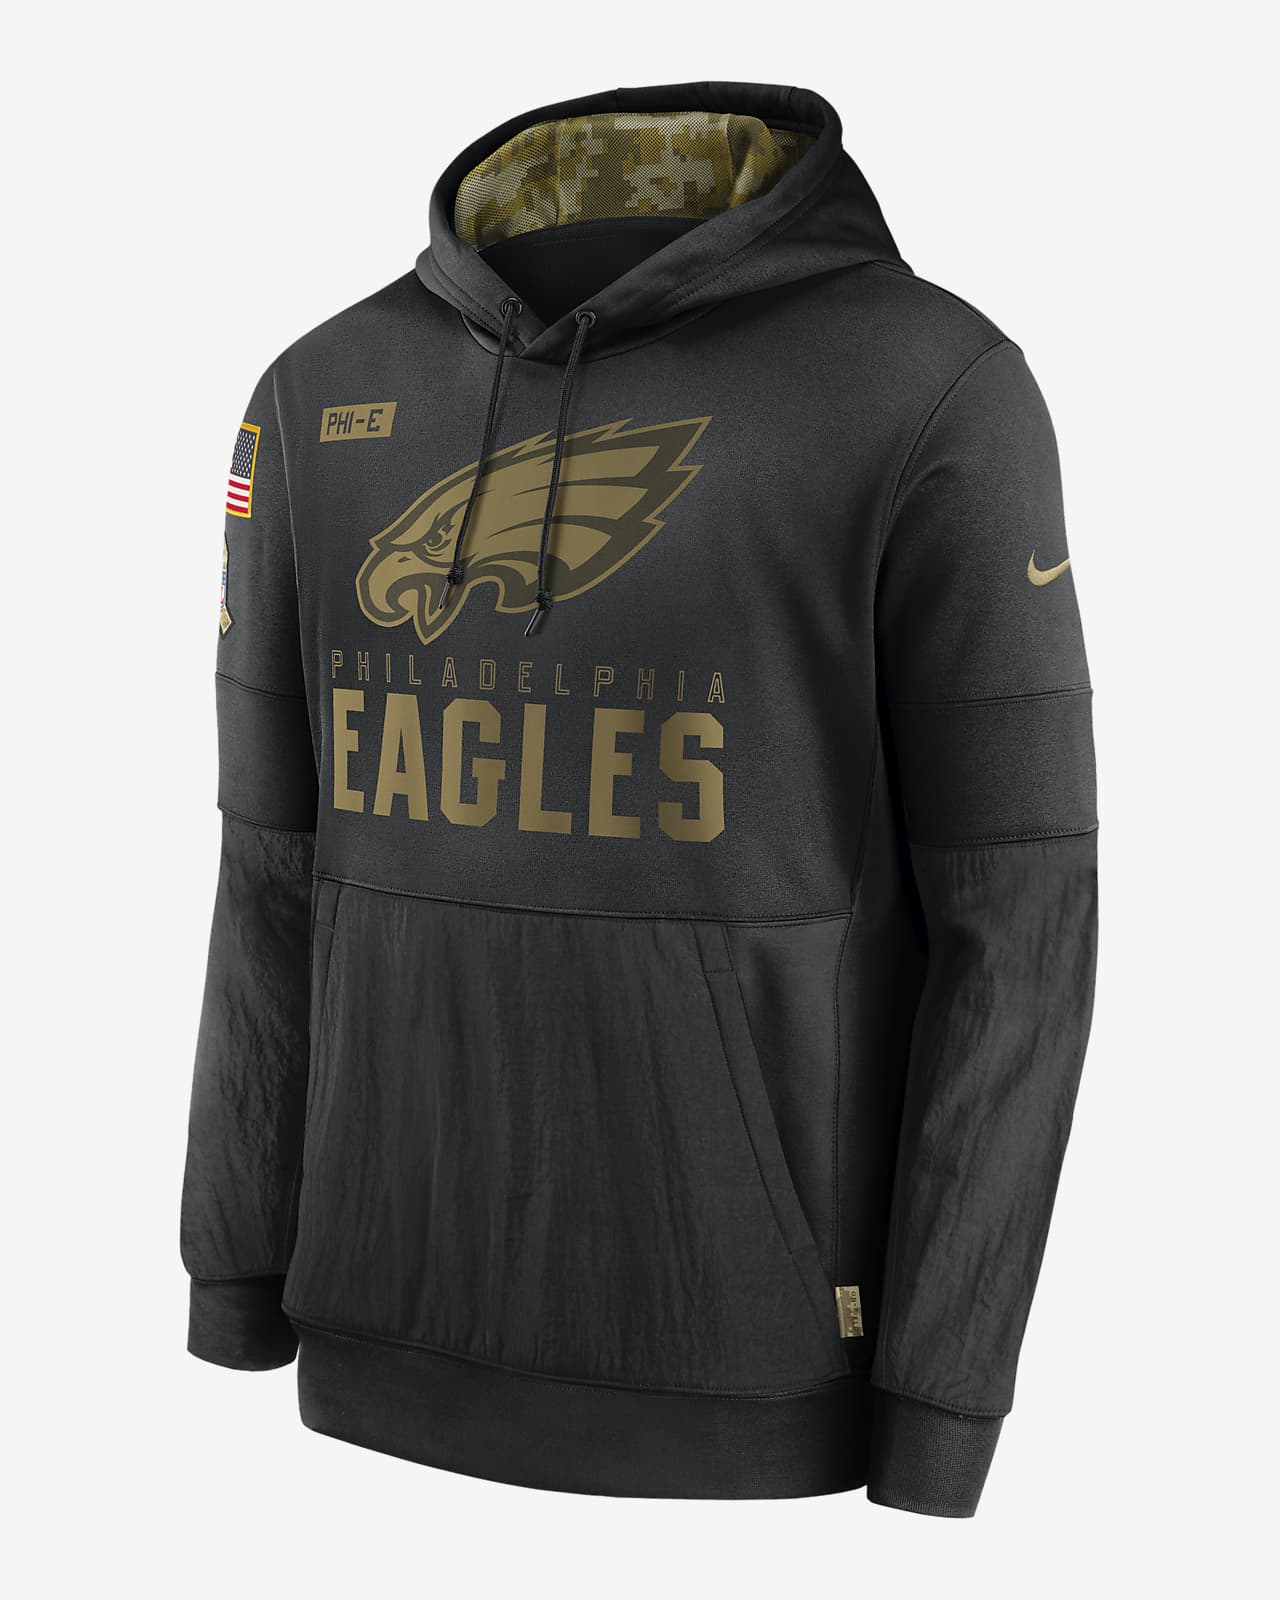 nike eagles jacket